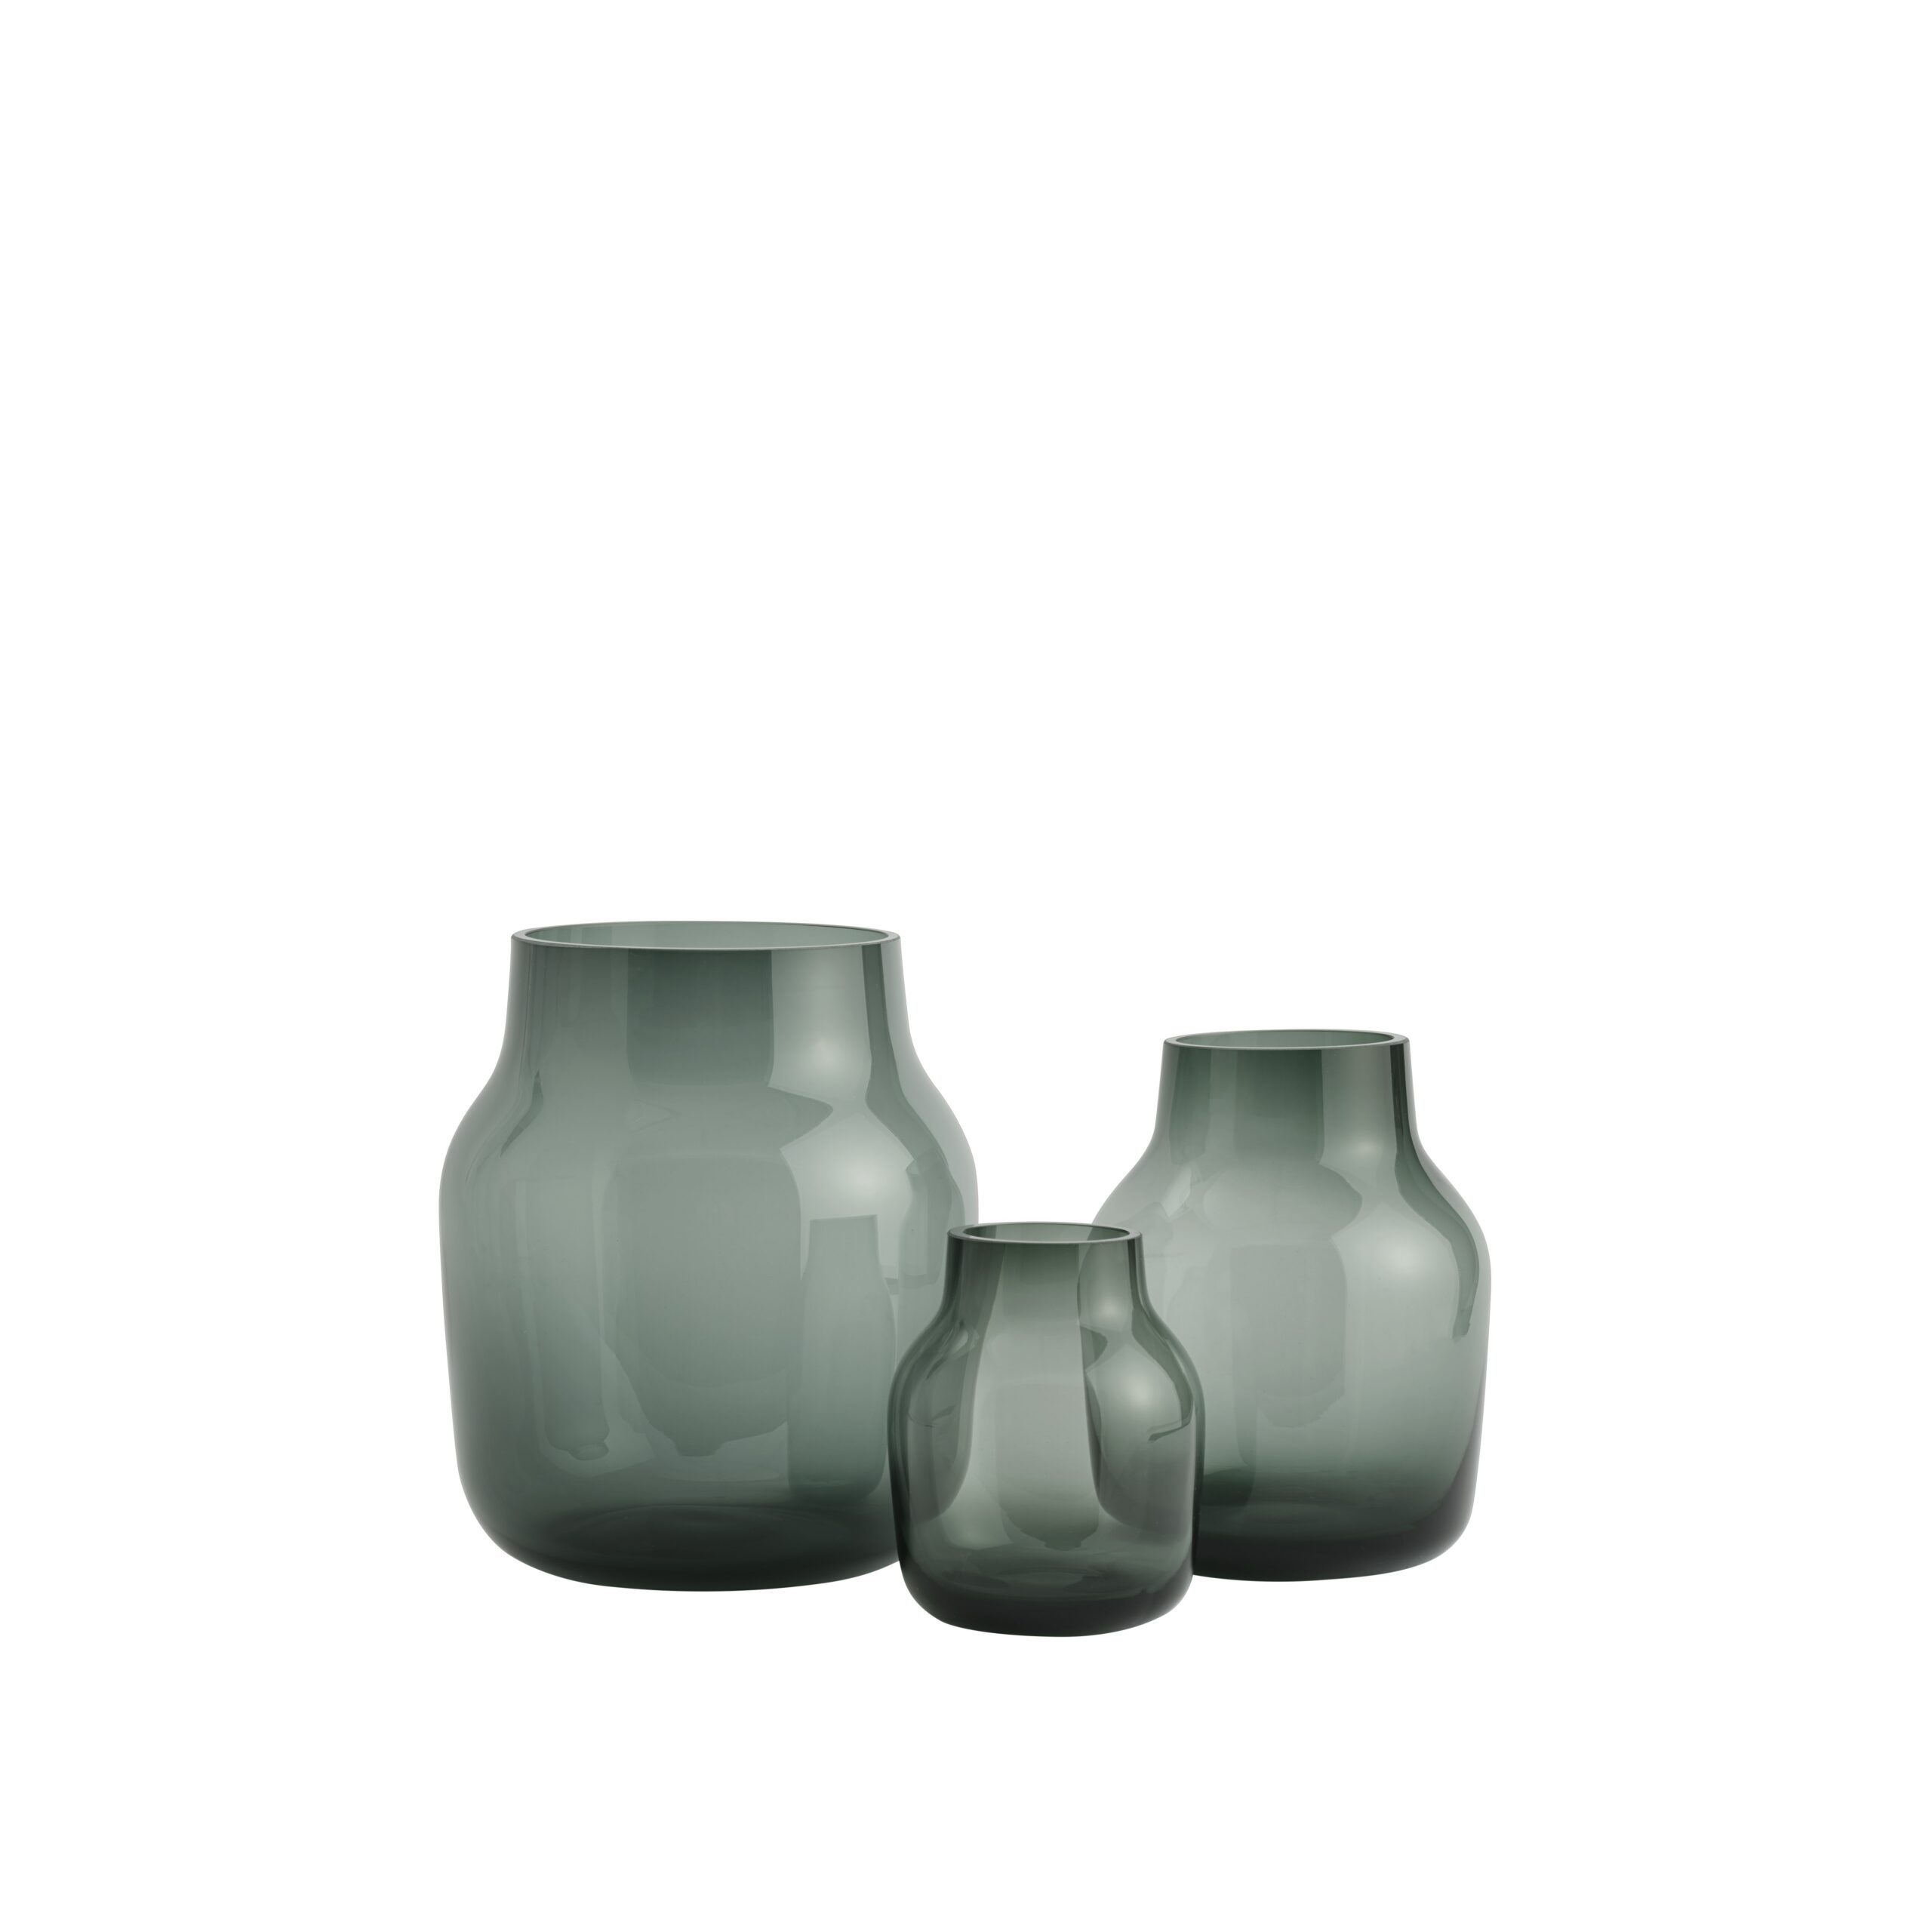 Silent-vase-family-dark-green-muuto-5000×5000-hi-res